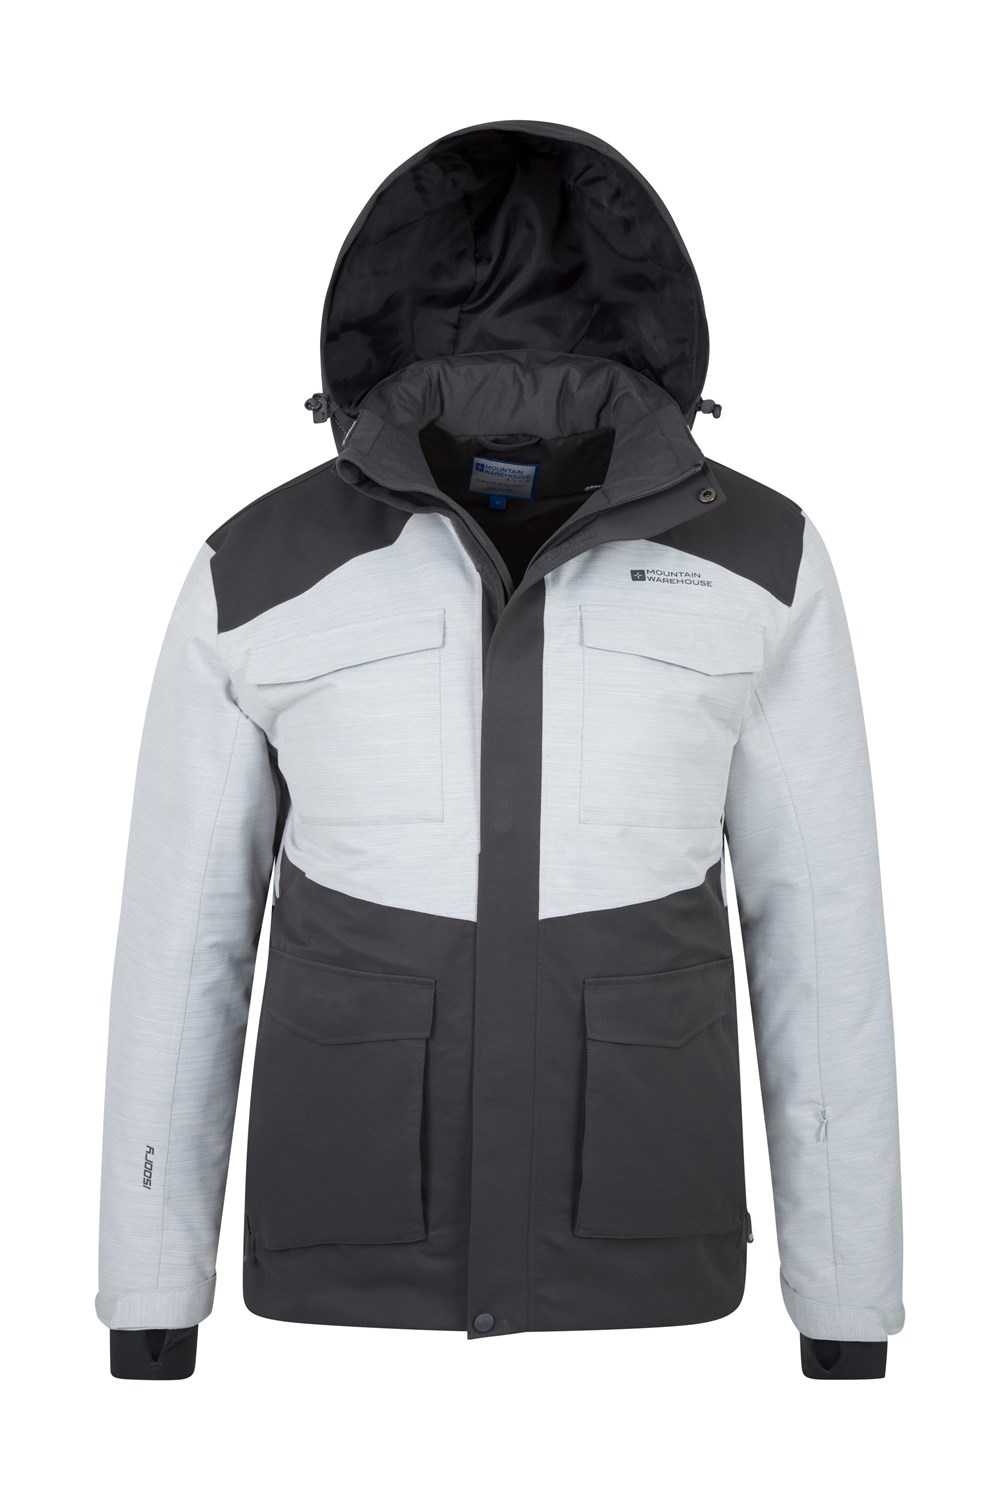 Mountain Warehouse Mens Waterproof Ski Jacket Breathable Winter Coat Taped Seams